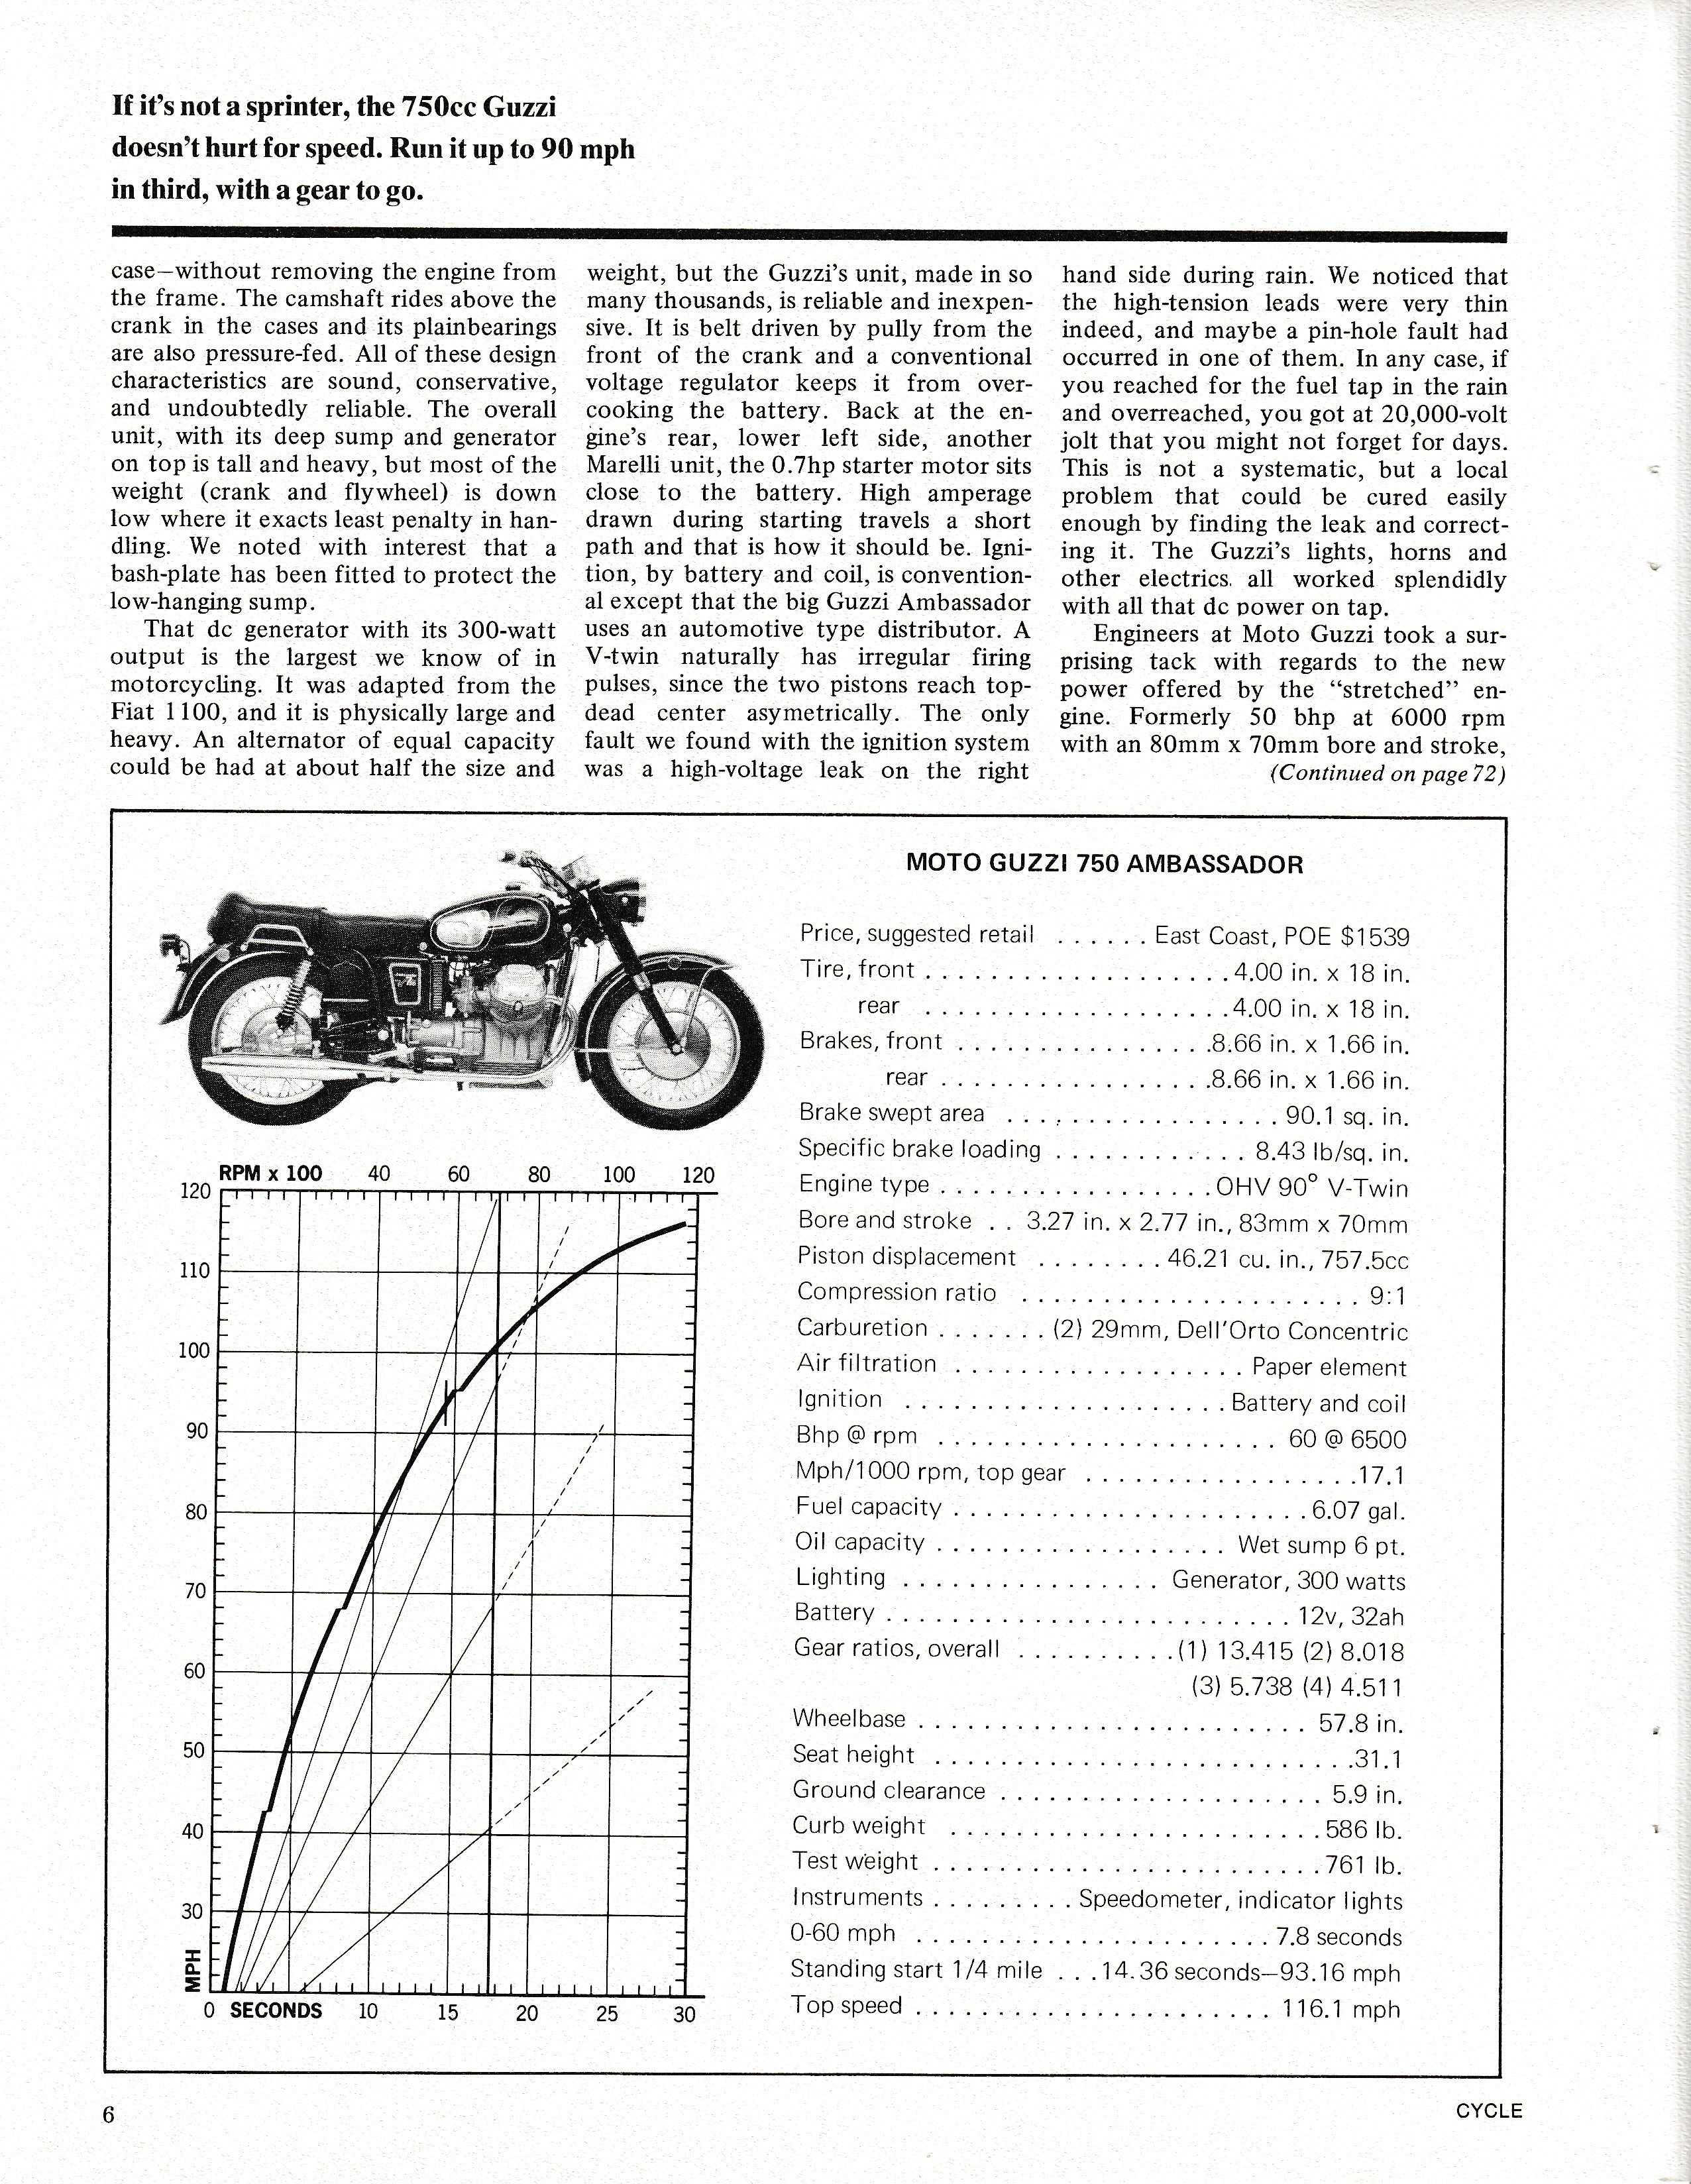 Moto Guzzi Ambassador factory brochure of magazine reviews, Page 6 of 16.